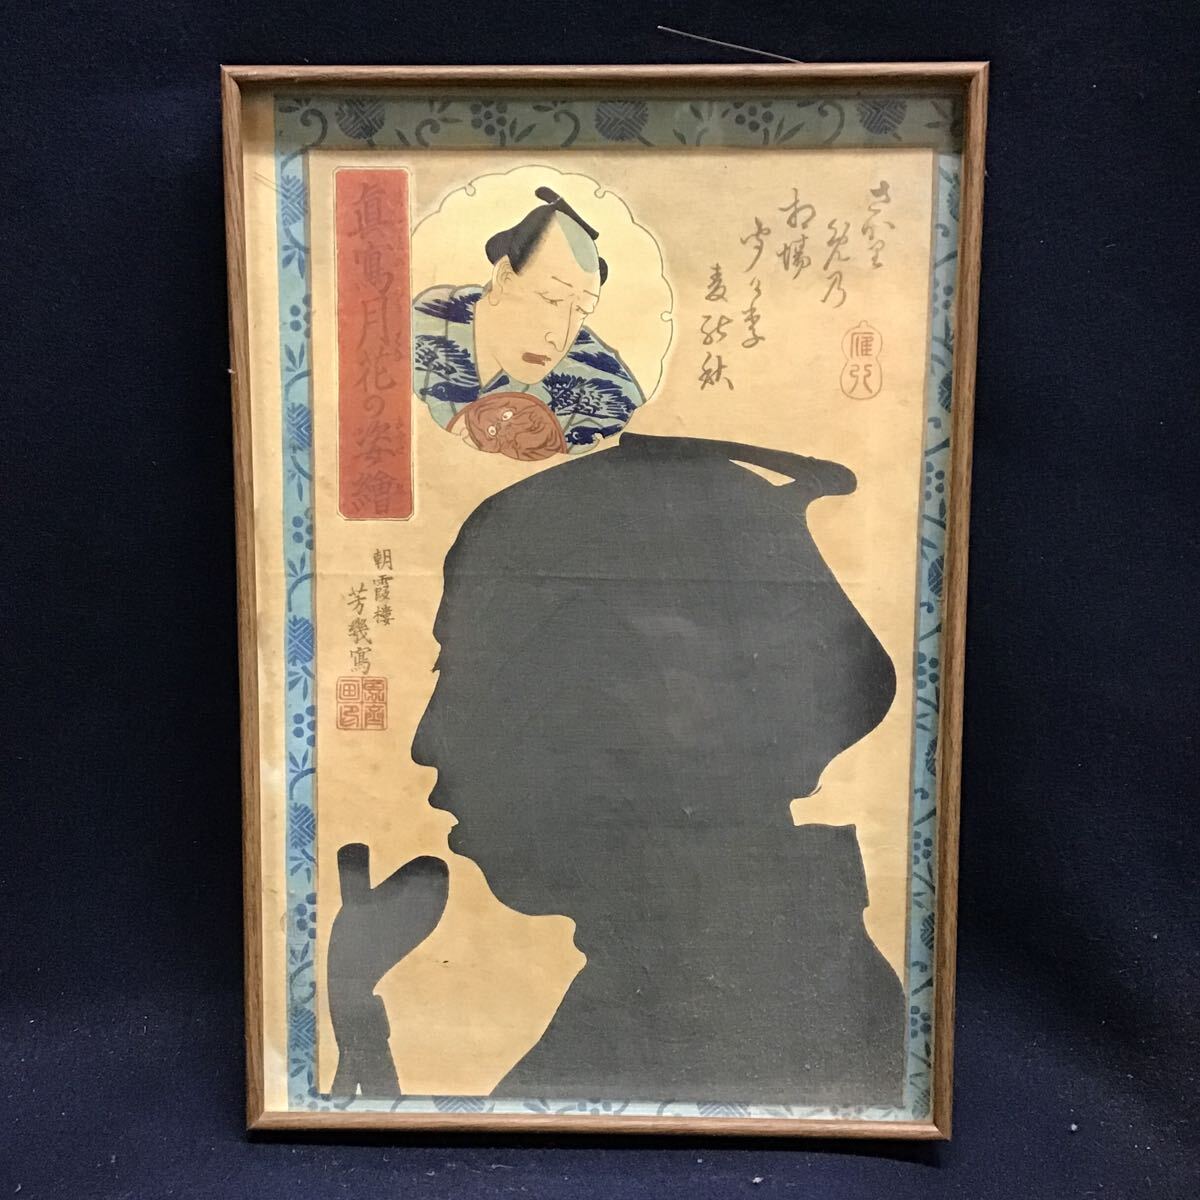 [Authentische Arbeit] Yoshiki Asakarou, Figurenmalerei von Tsukihana Shinsha, Azusa Marutoku, Holzschnitt, nishiki-e, bijinga, Bild des Schauspielers, großes Format, ukiyo-e, gerahmt, Malerei, Ukiyo-e, drucken, Kabuki-Bild, Schauspielerbild